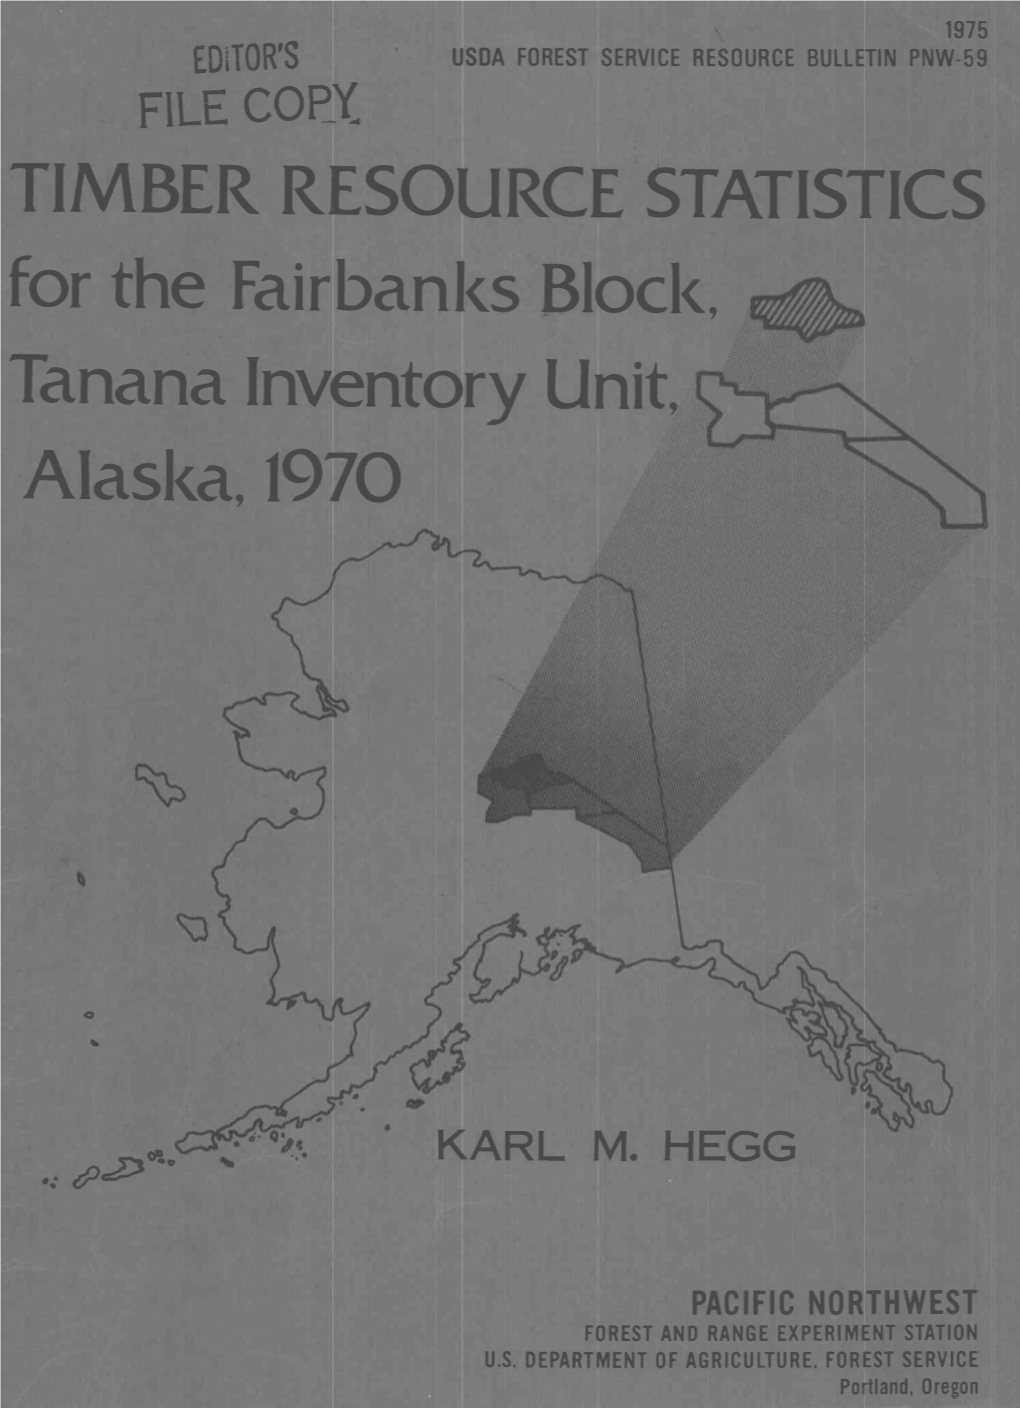 Tanana Inventory Unit, Alaslca, 1970